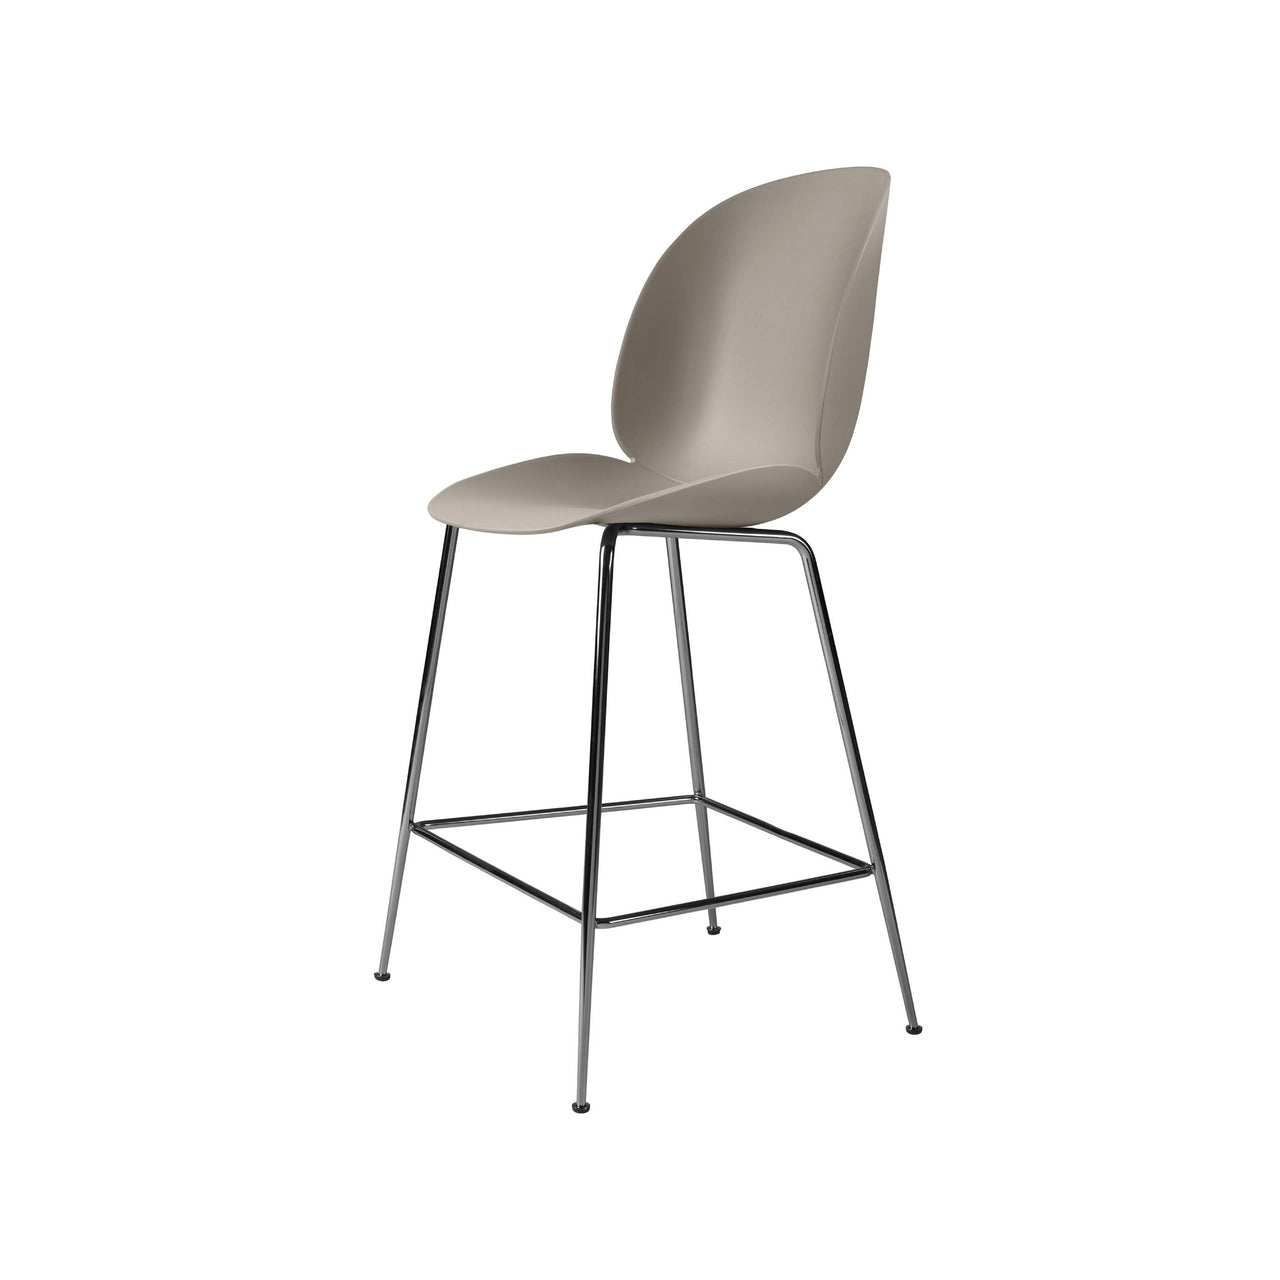 Beetle Bar + Counter Chair: Felt Glides + Counter + New Beige + Black Chrome